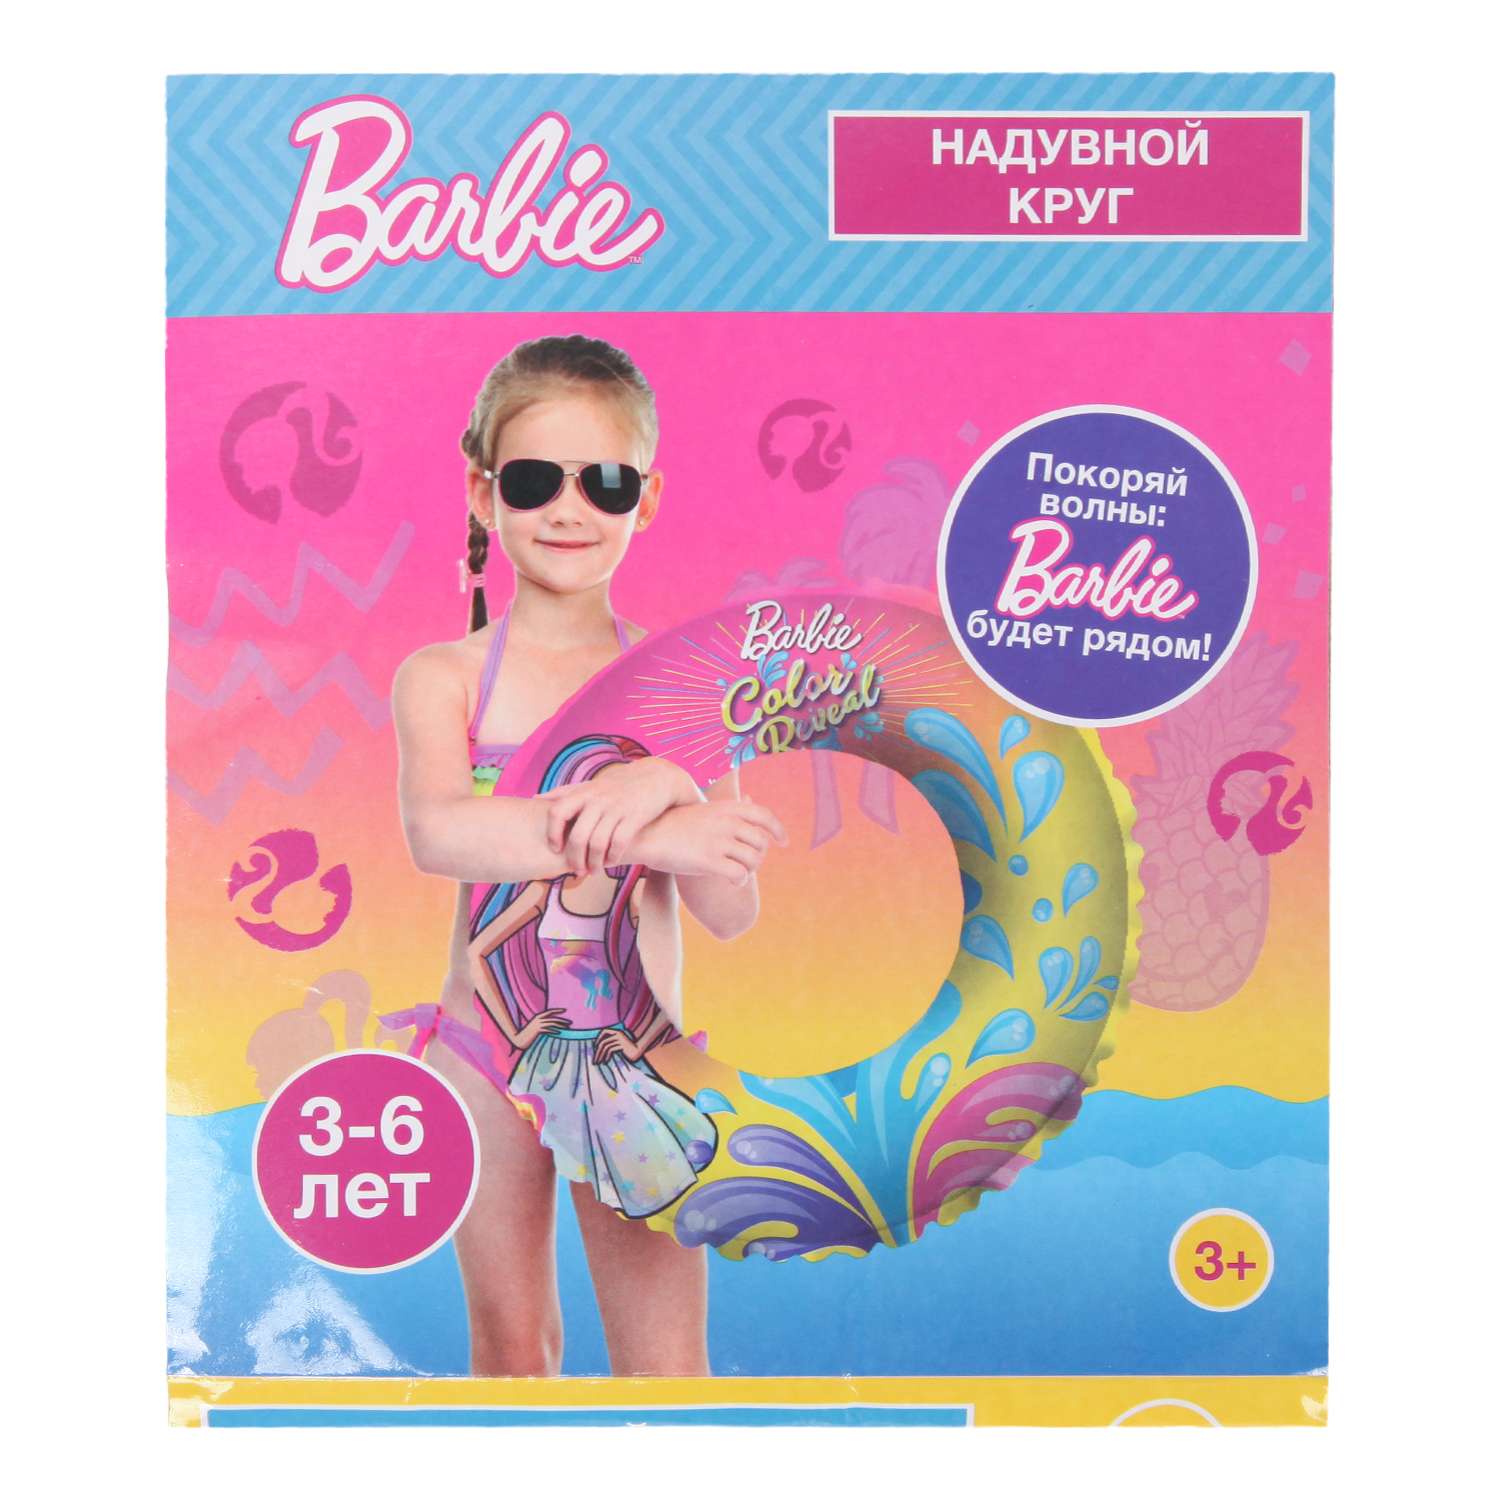 Круг для плавания Barbie OXSQ-7 - фото 2